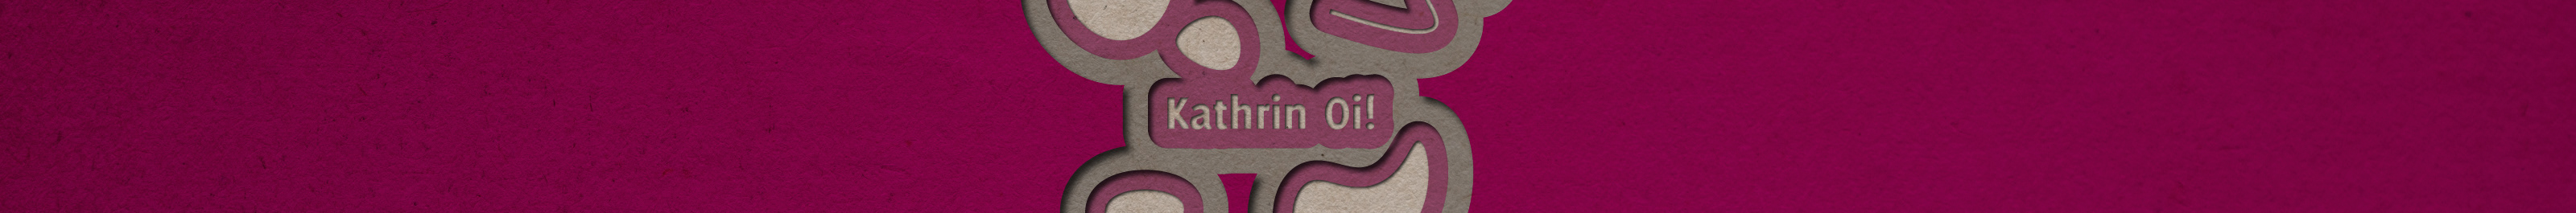 Kathrin Oi!'s profile banner